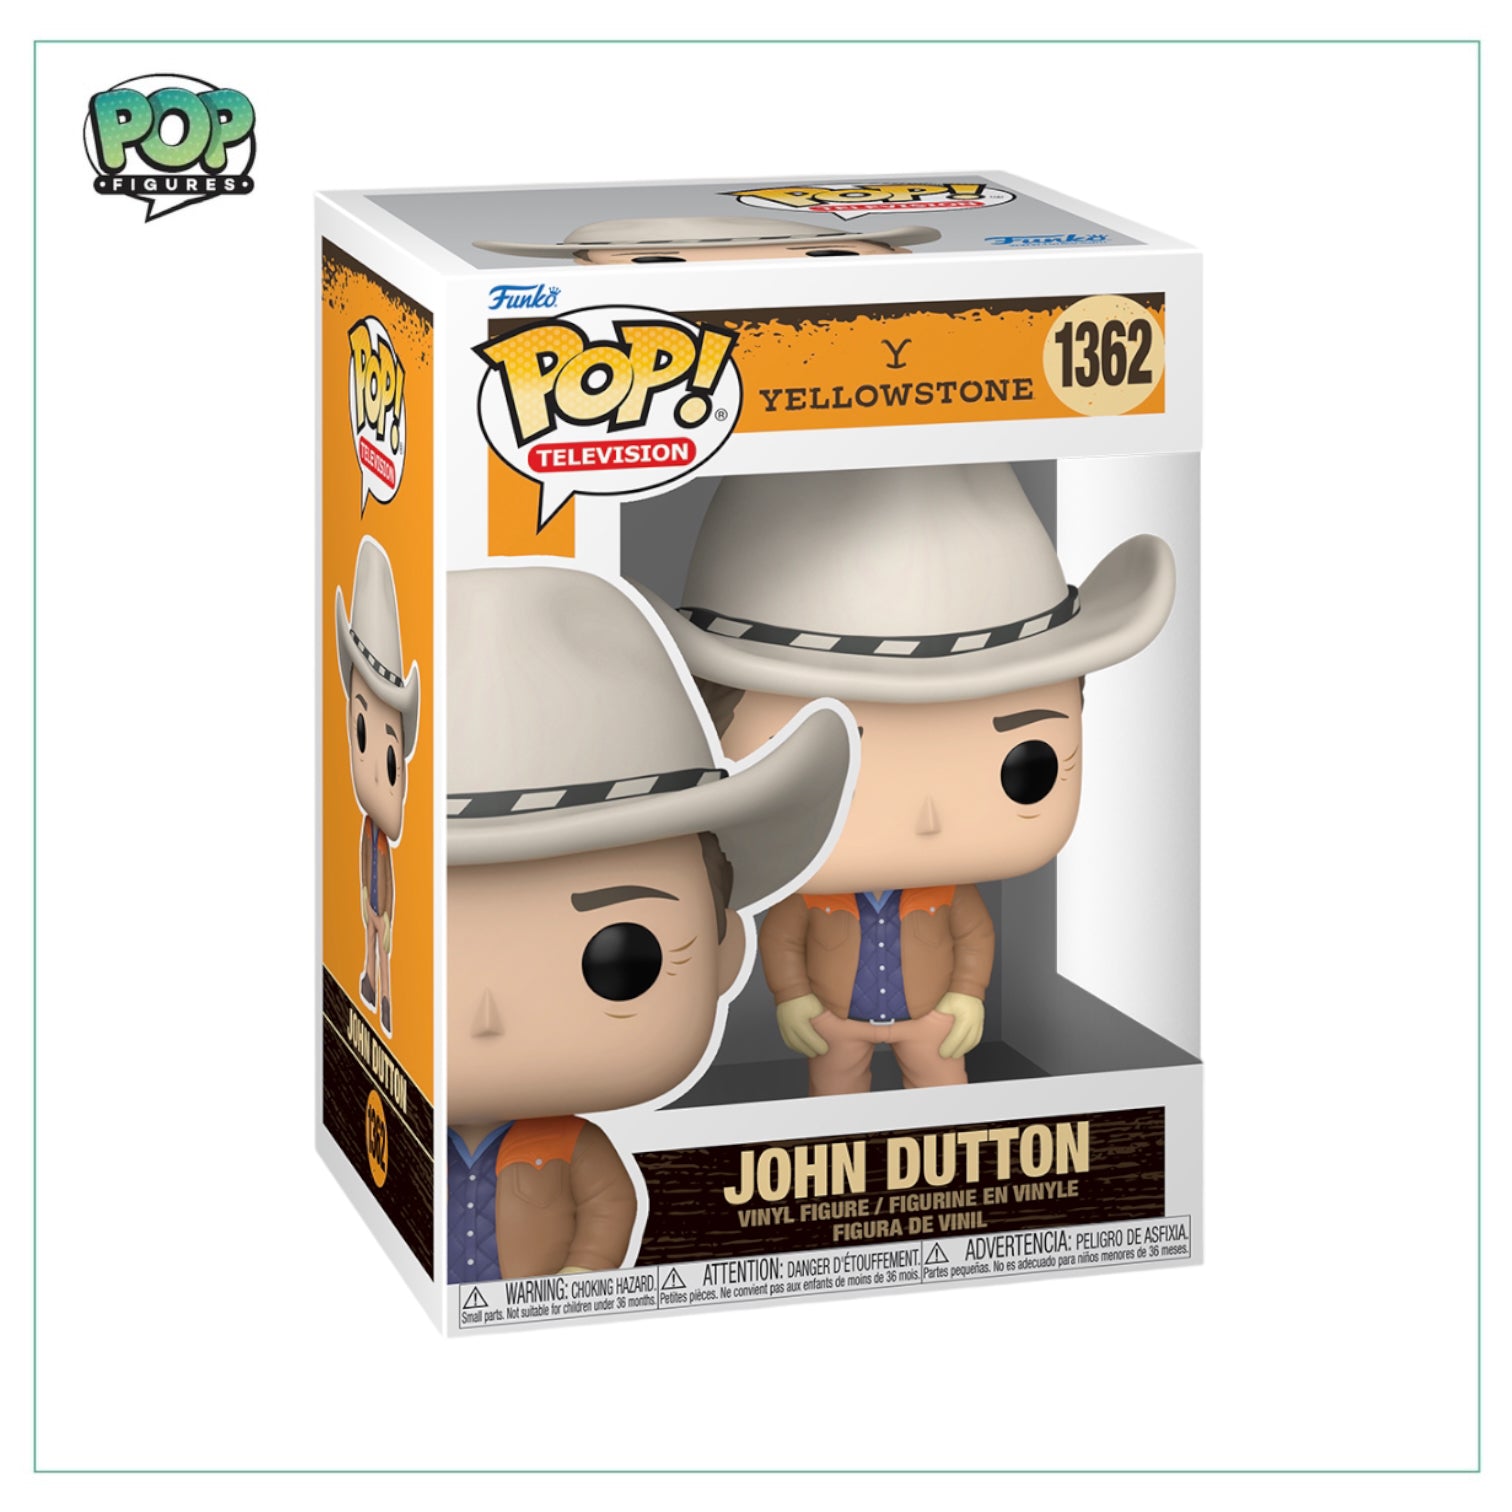 John Dutton #1362 Funko Pop! Yellowstone - PREORDER